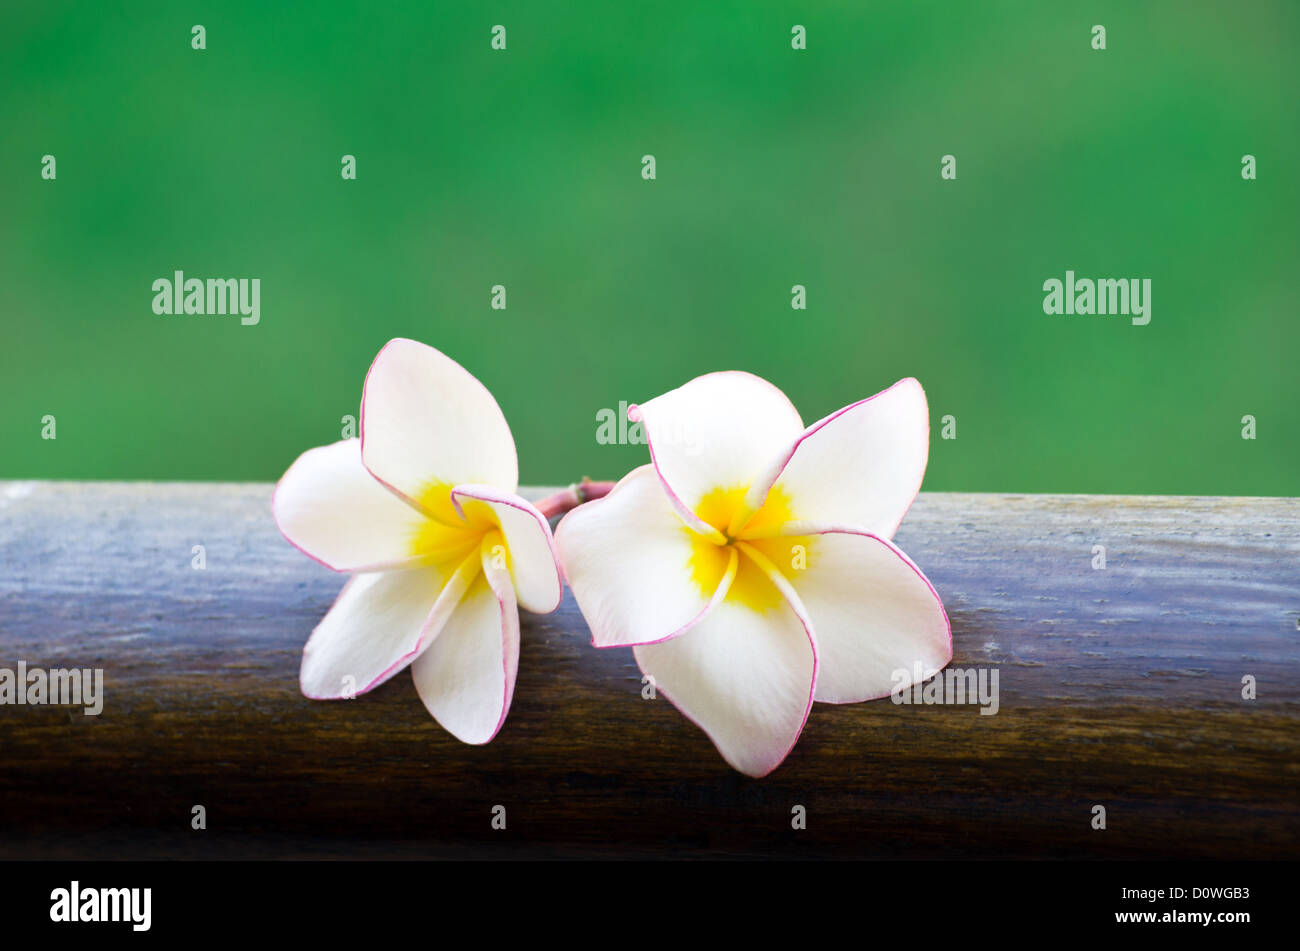 Pink frangipani flowers on green background Stock Photo